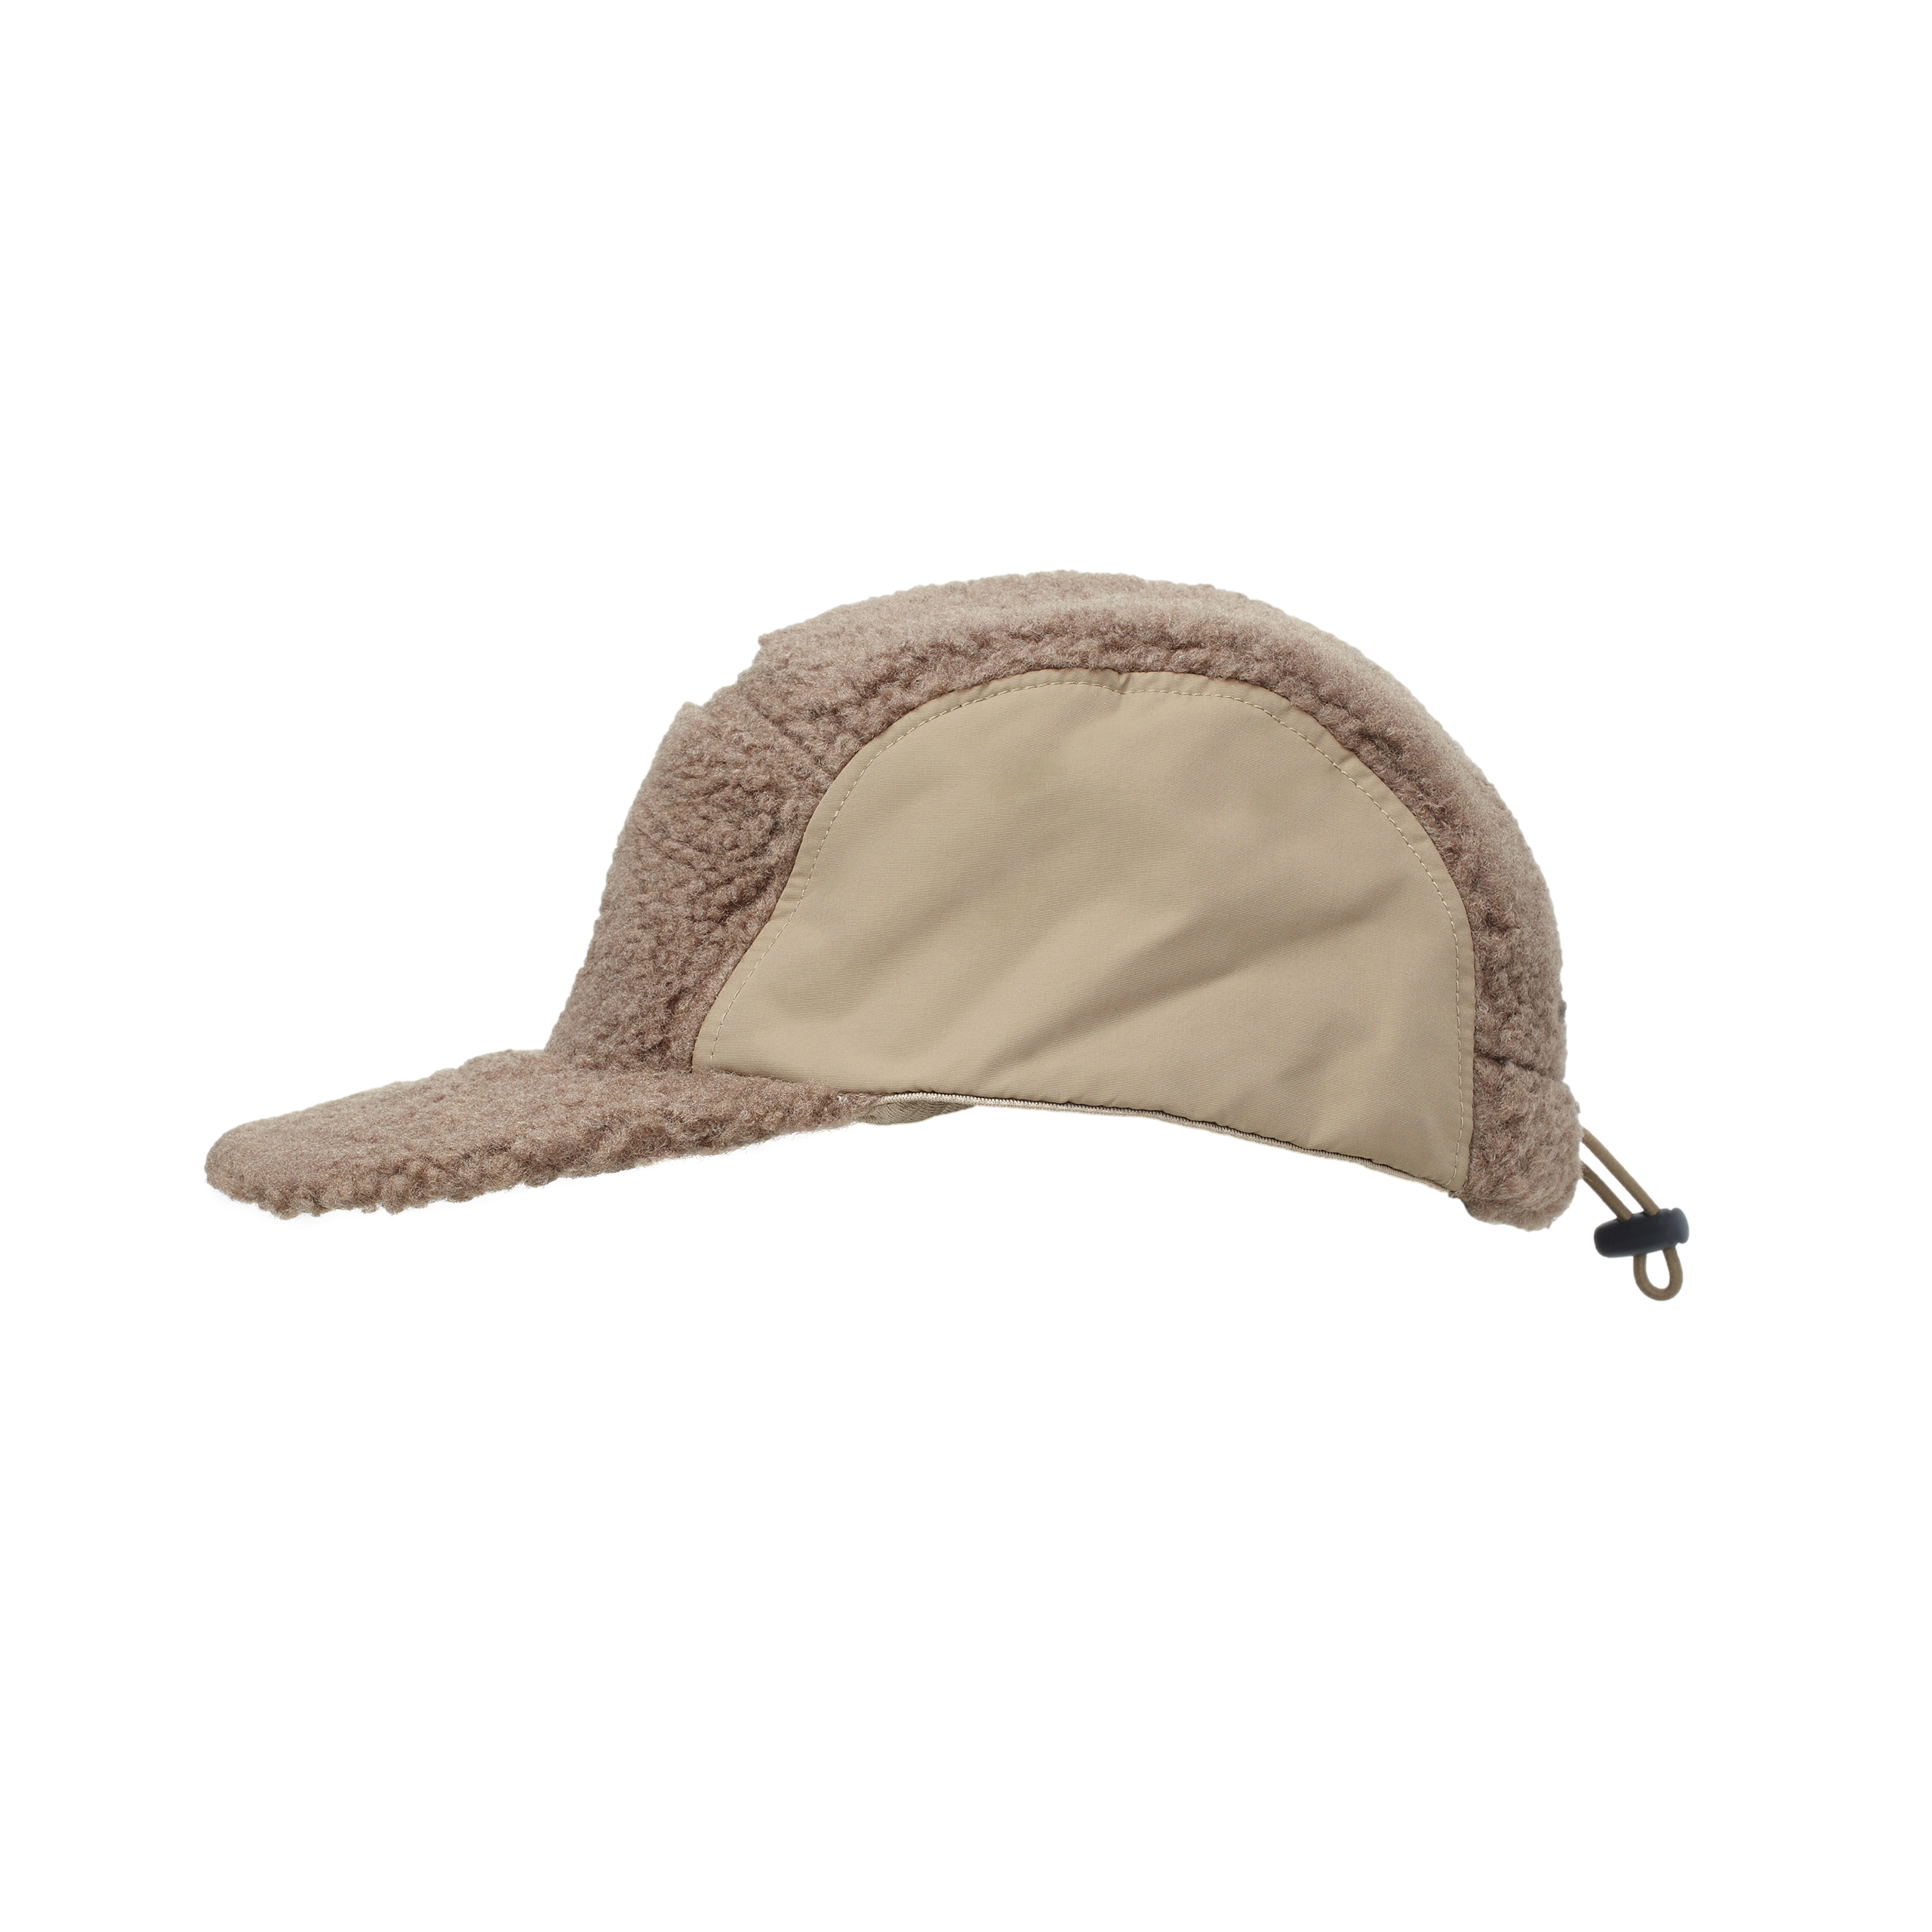 Комбинированная кепка с вышивкой Undercover UP2C4H01/BEIGE, размер One Size UP2C4H01/BEIGE - фото 4